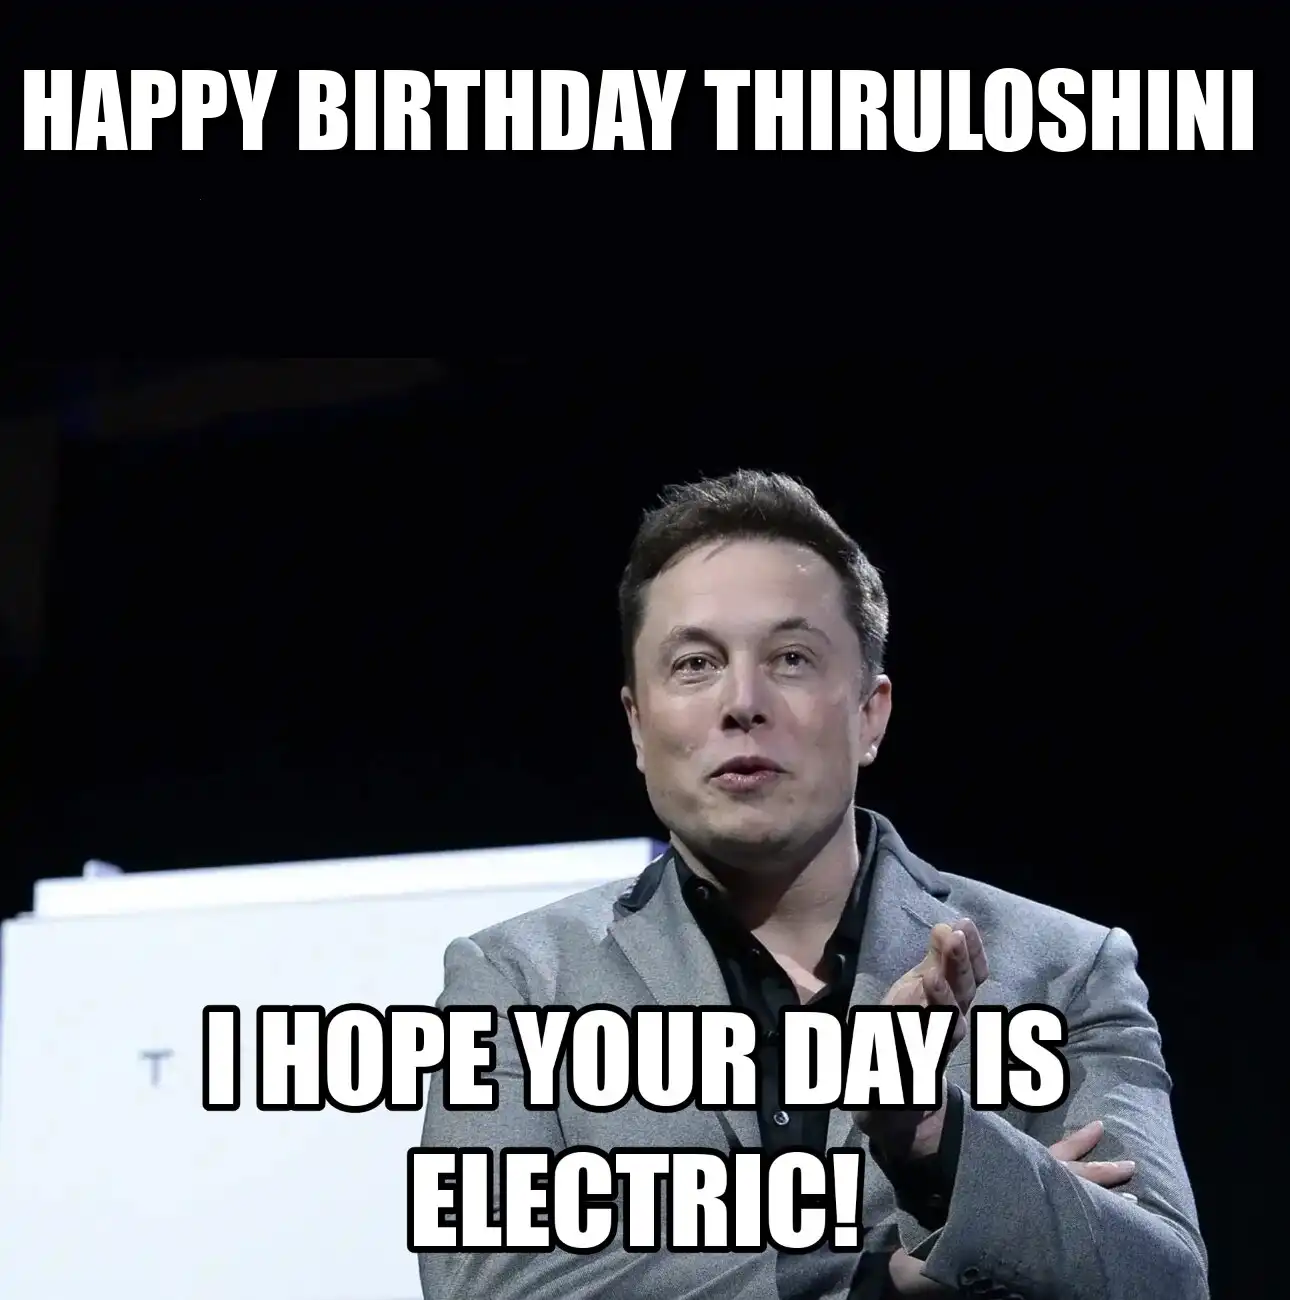 Happy Birthday Thiruloshini I Hope Your Day Is Electric Meme